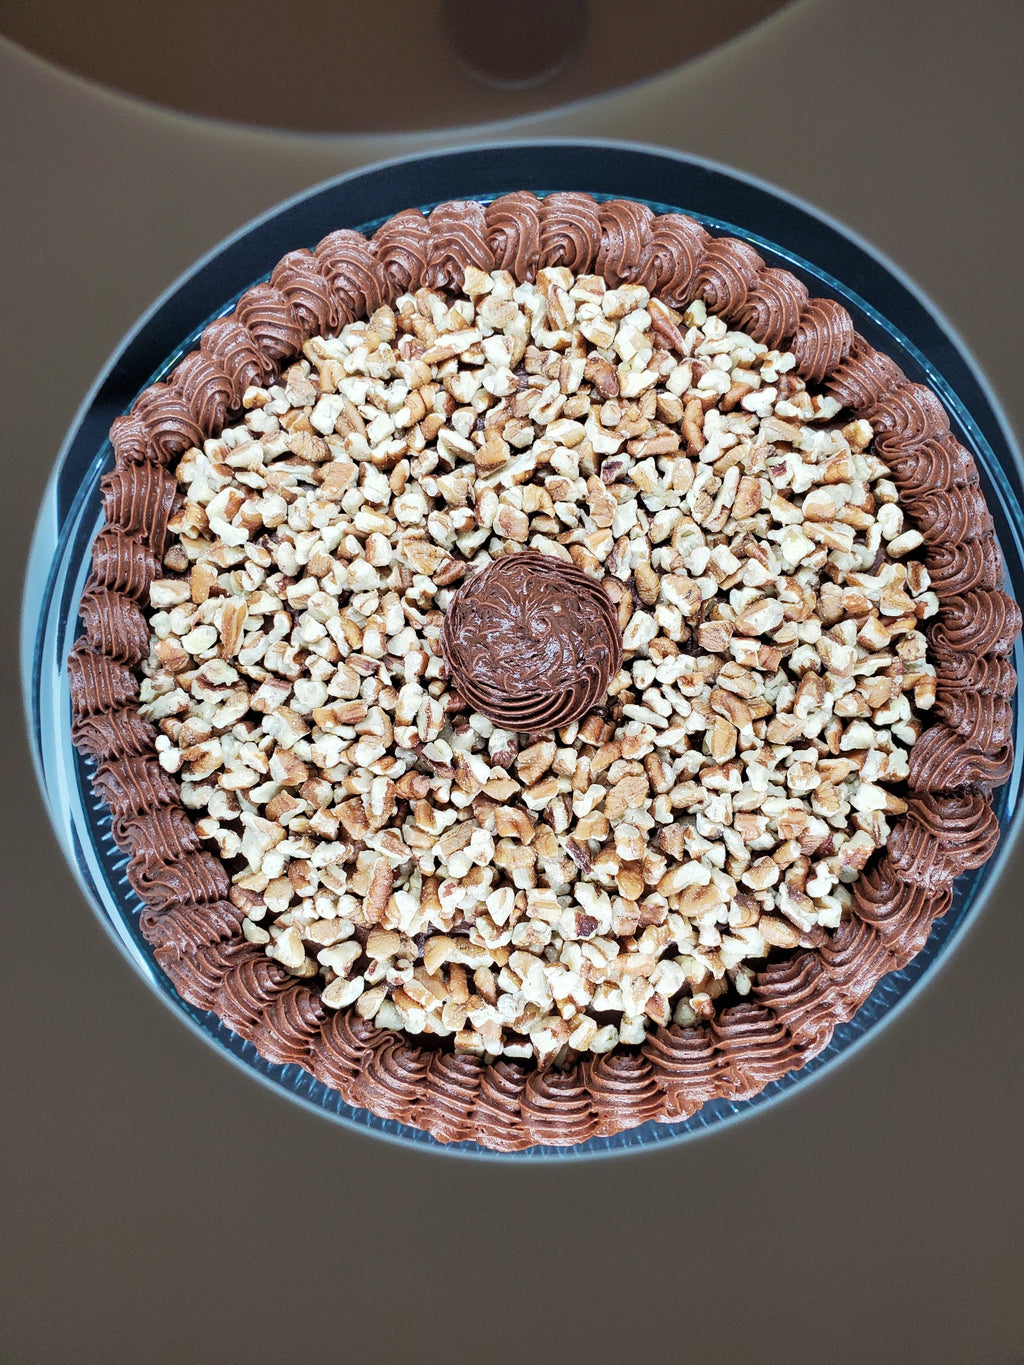 9 inch Chocolate Coffee Cake with walnuts on top